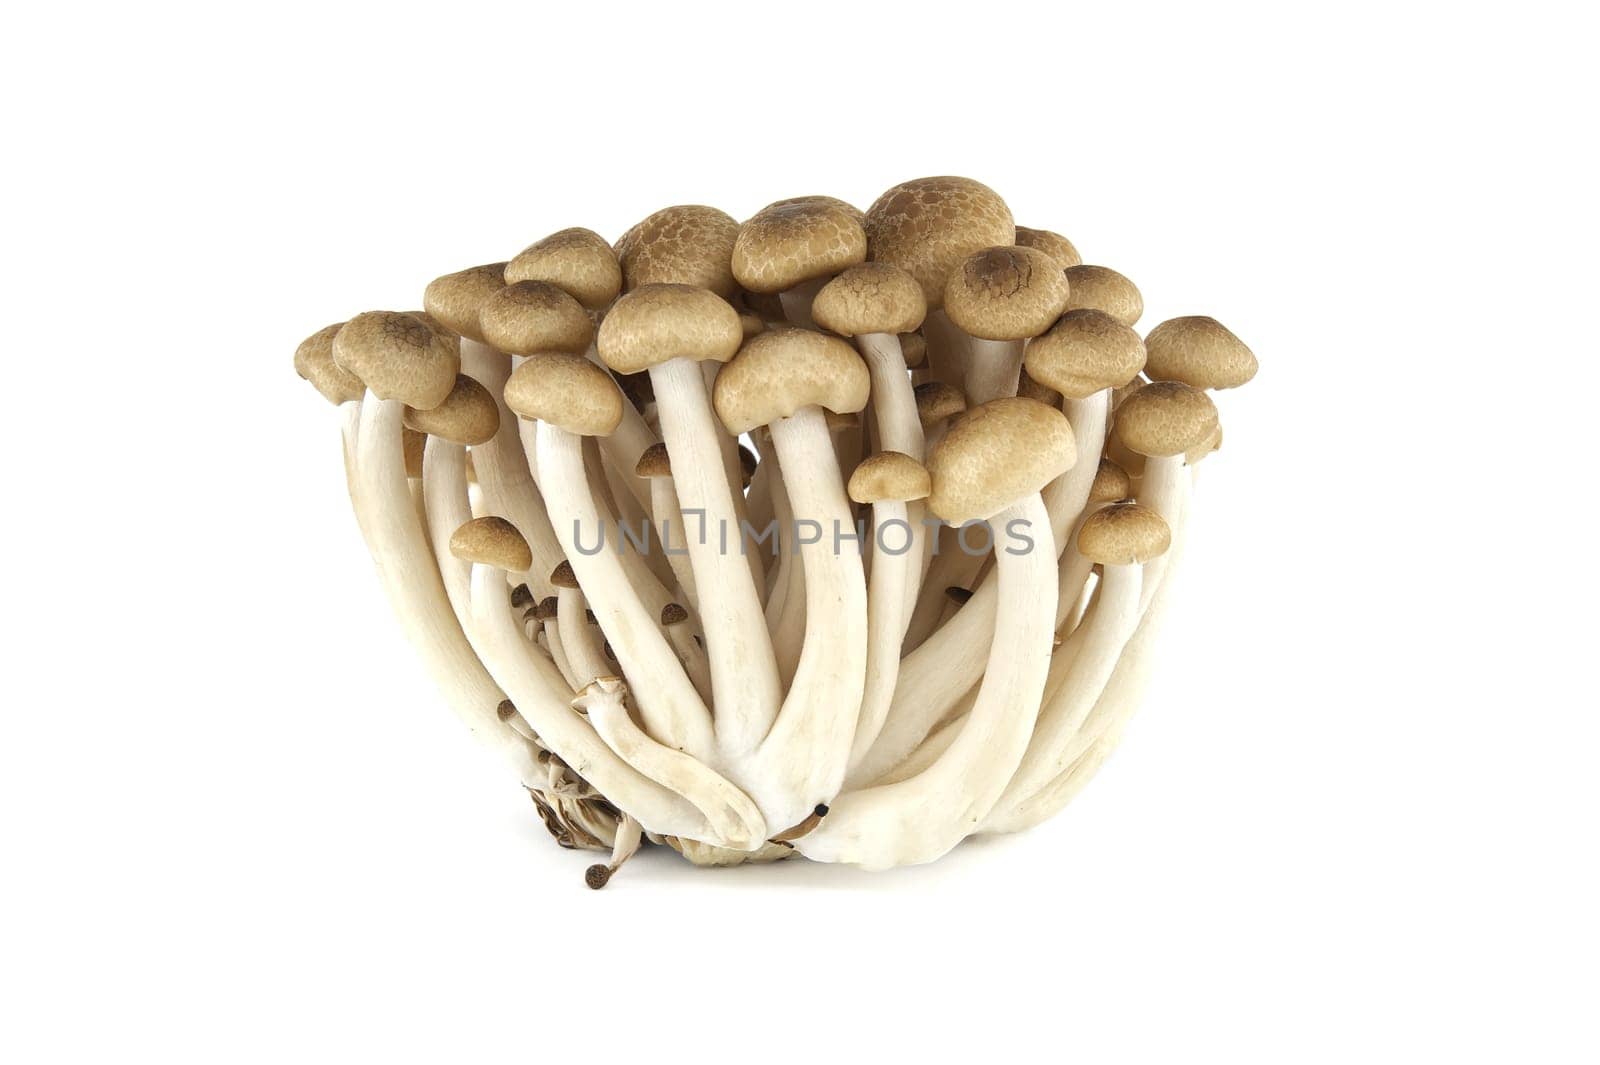 Beech mushrooms (Hypsizygus tessellatus) isolated on white background, type of edible mushroom that grows on beech trees